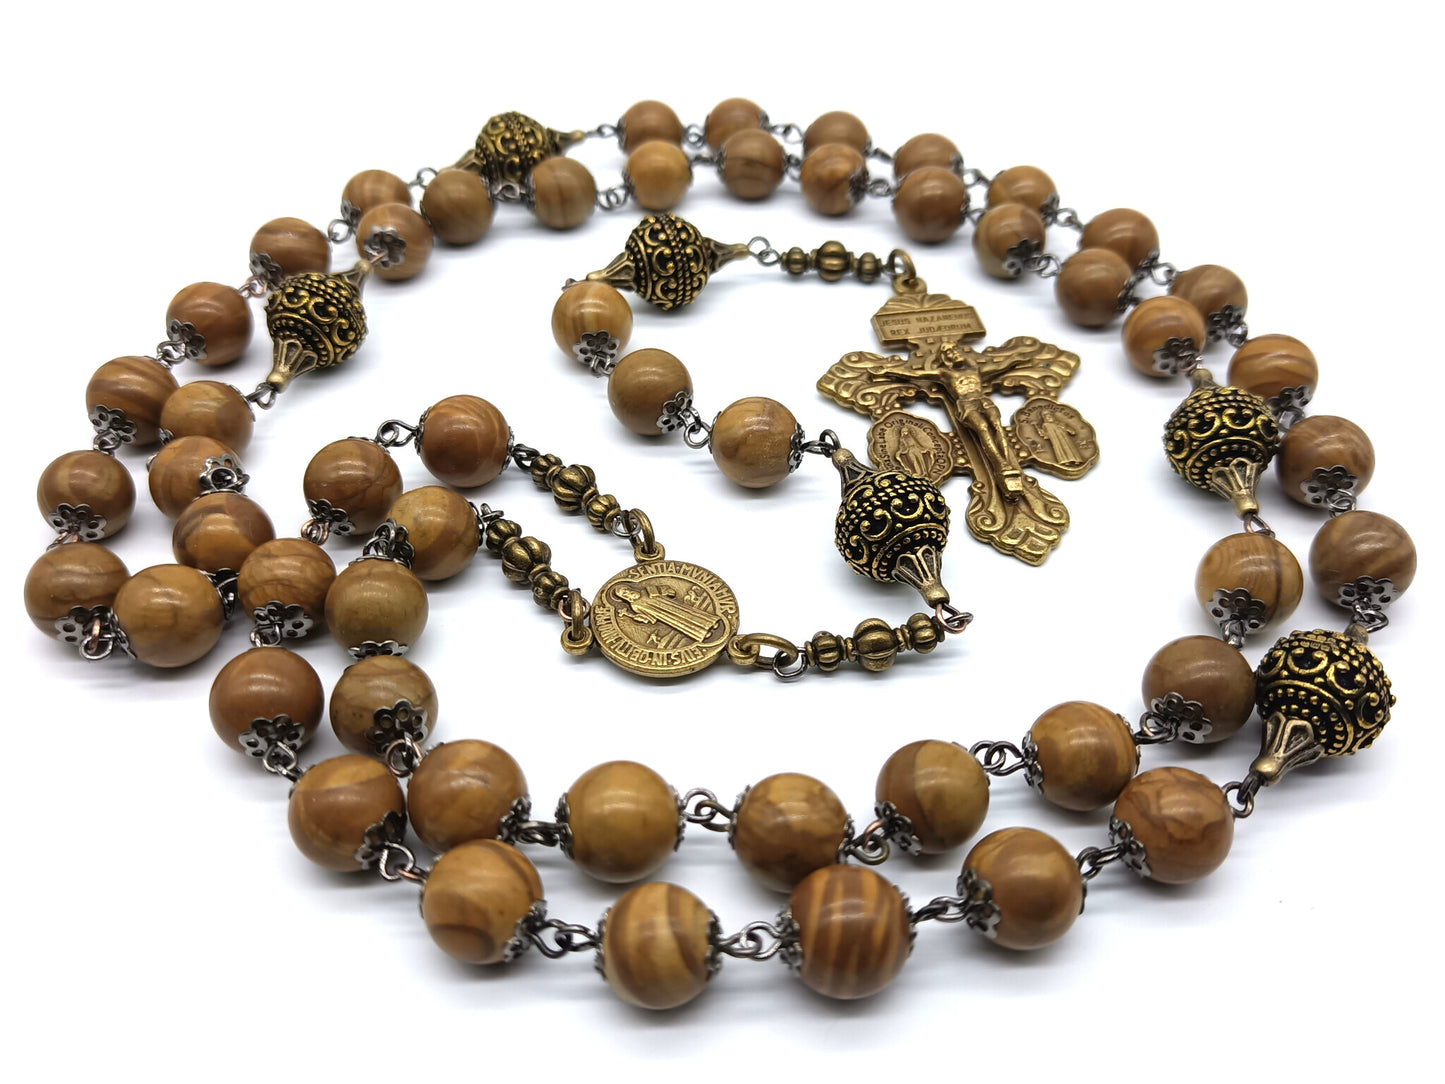 Saint Bernard unique rosary beads with gemstone beads, bronze Pardon crucifix, St. Bernard medal and brass pater beads.